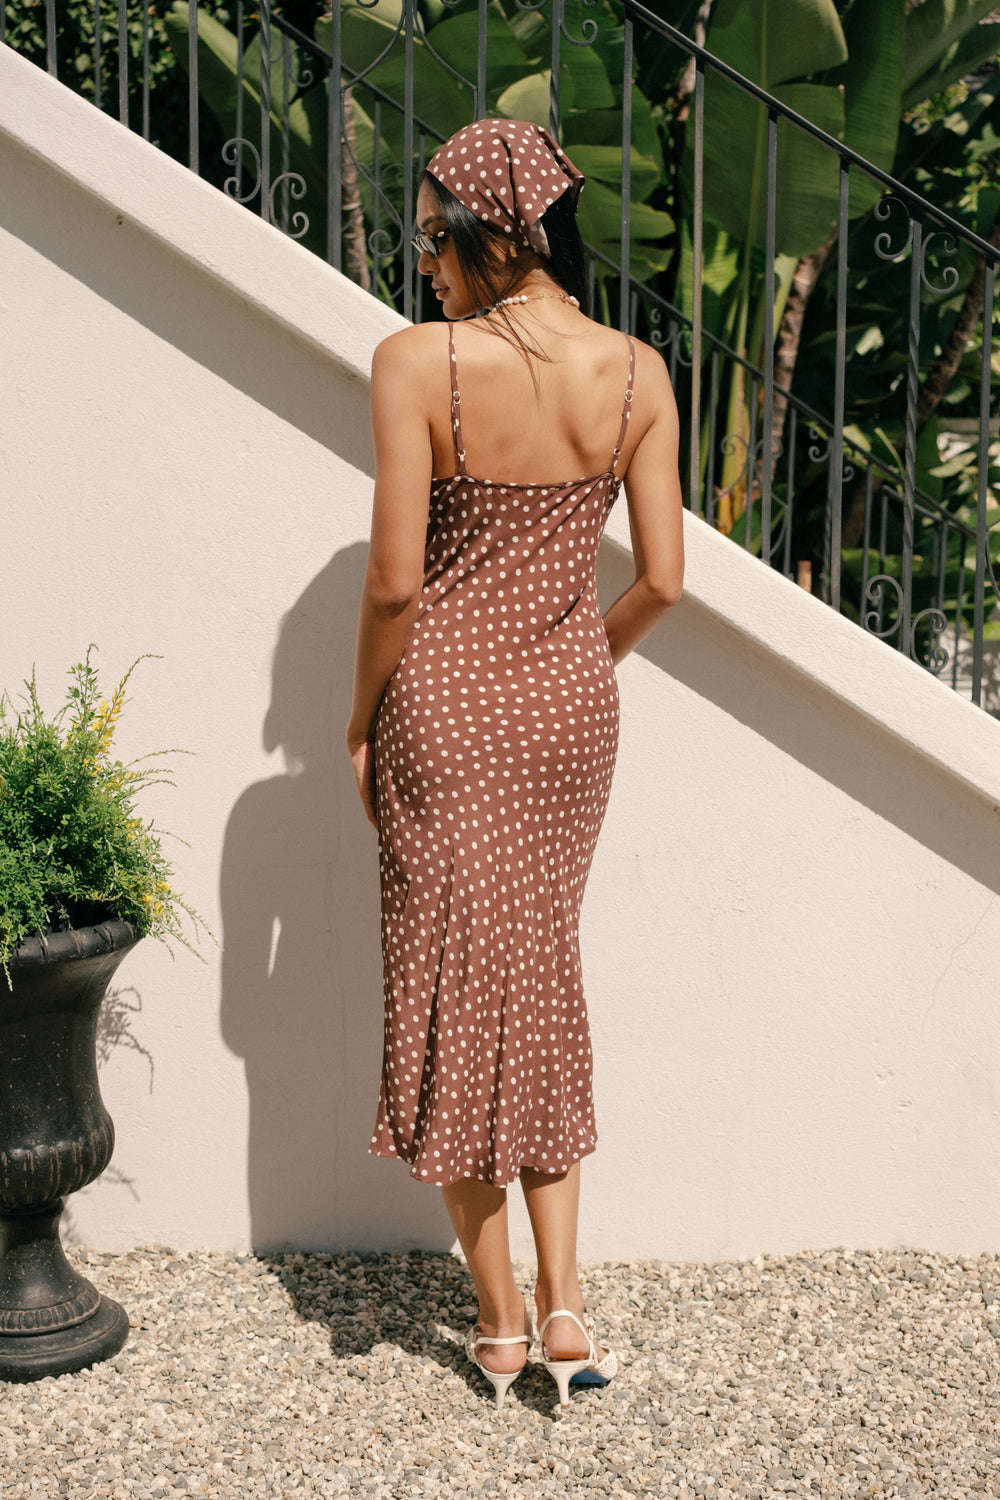 Freya Slip Dress in Brown Polka Dots - Whimsy & Row